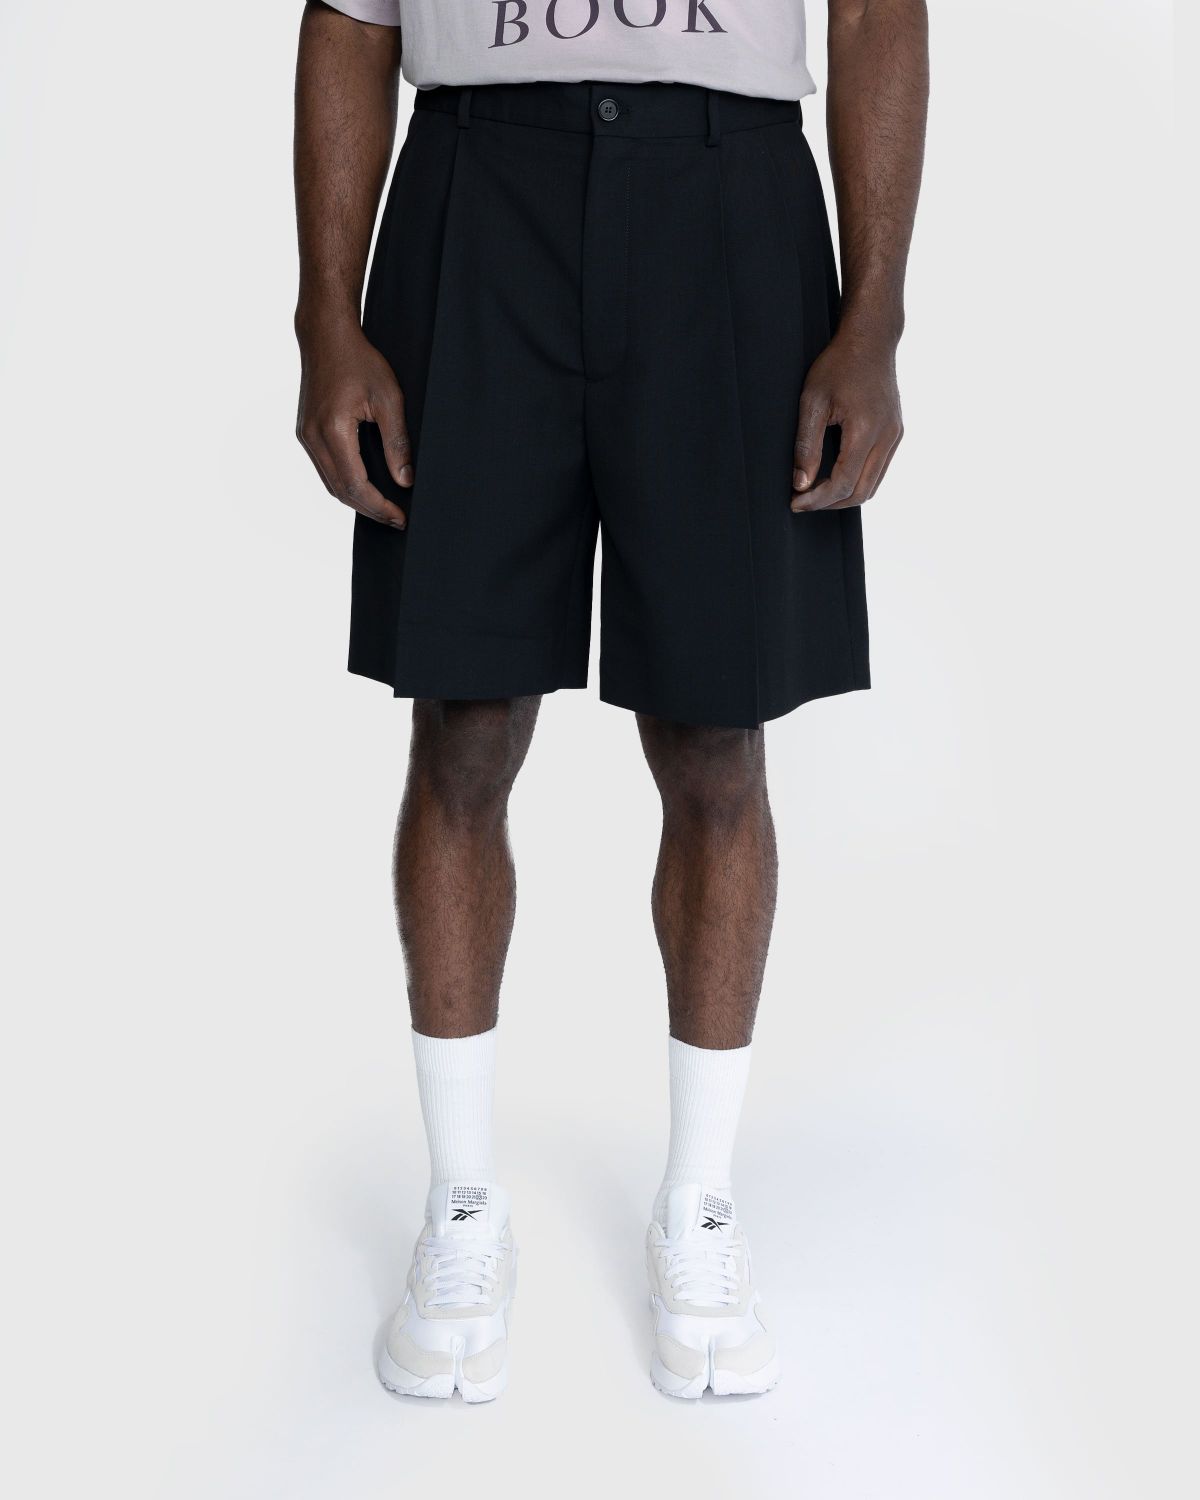 Acne Studios – Tailored Pleated Shorts Black - Bermuda Cuts - Black - Image 2